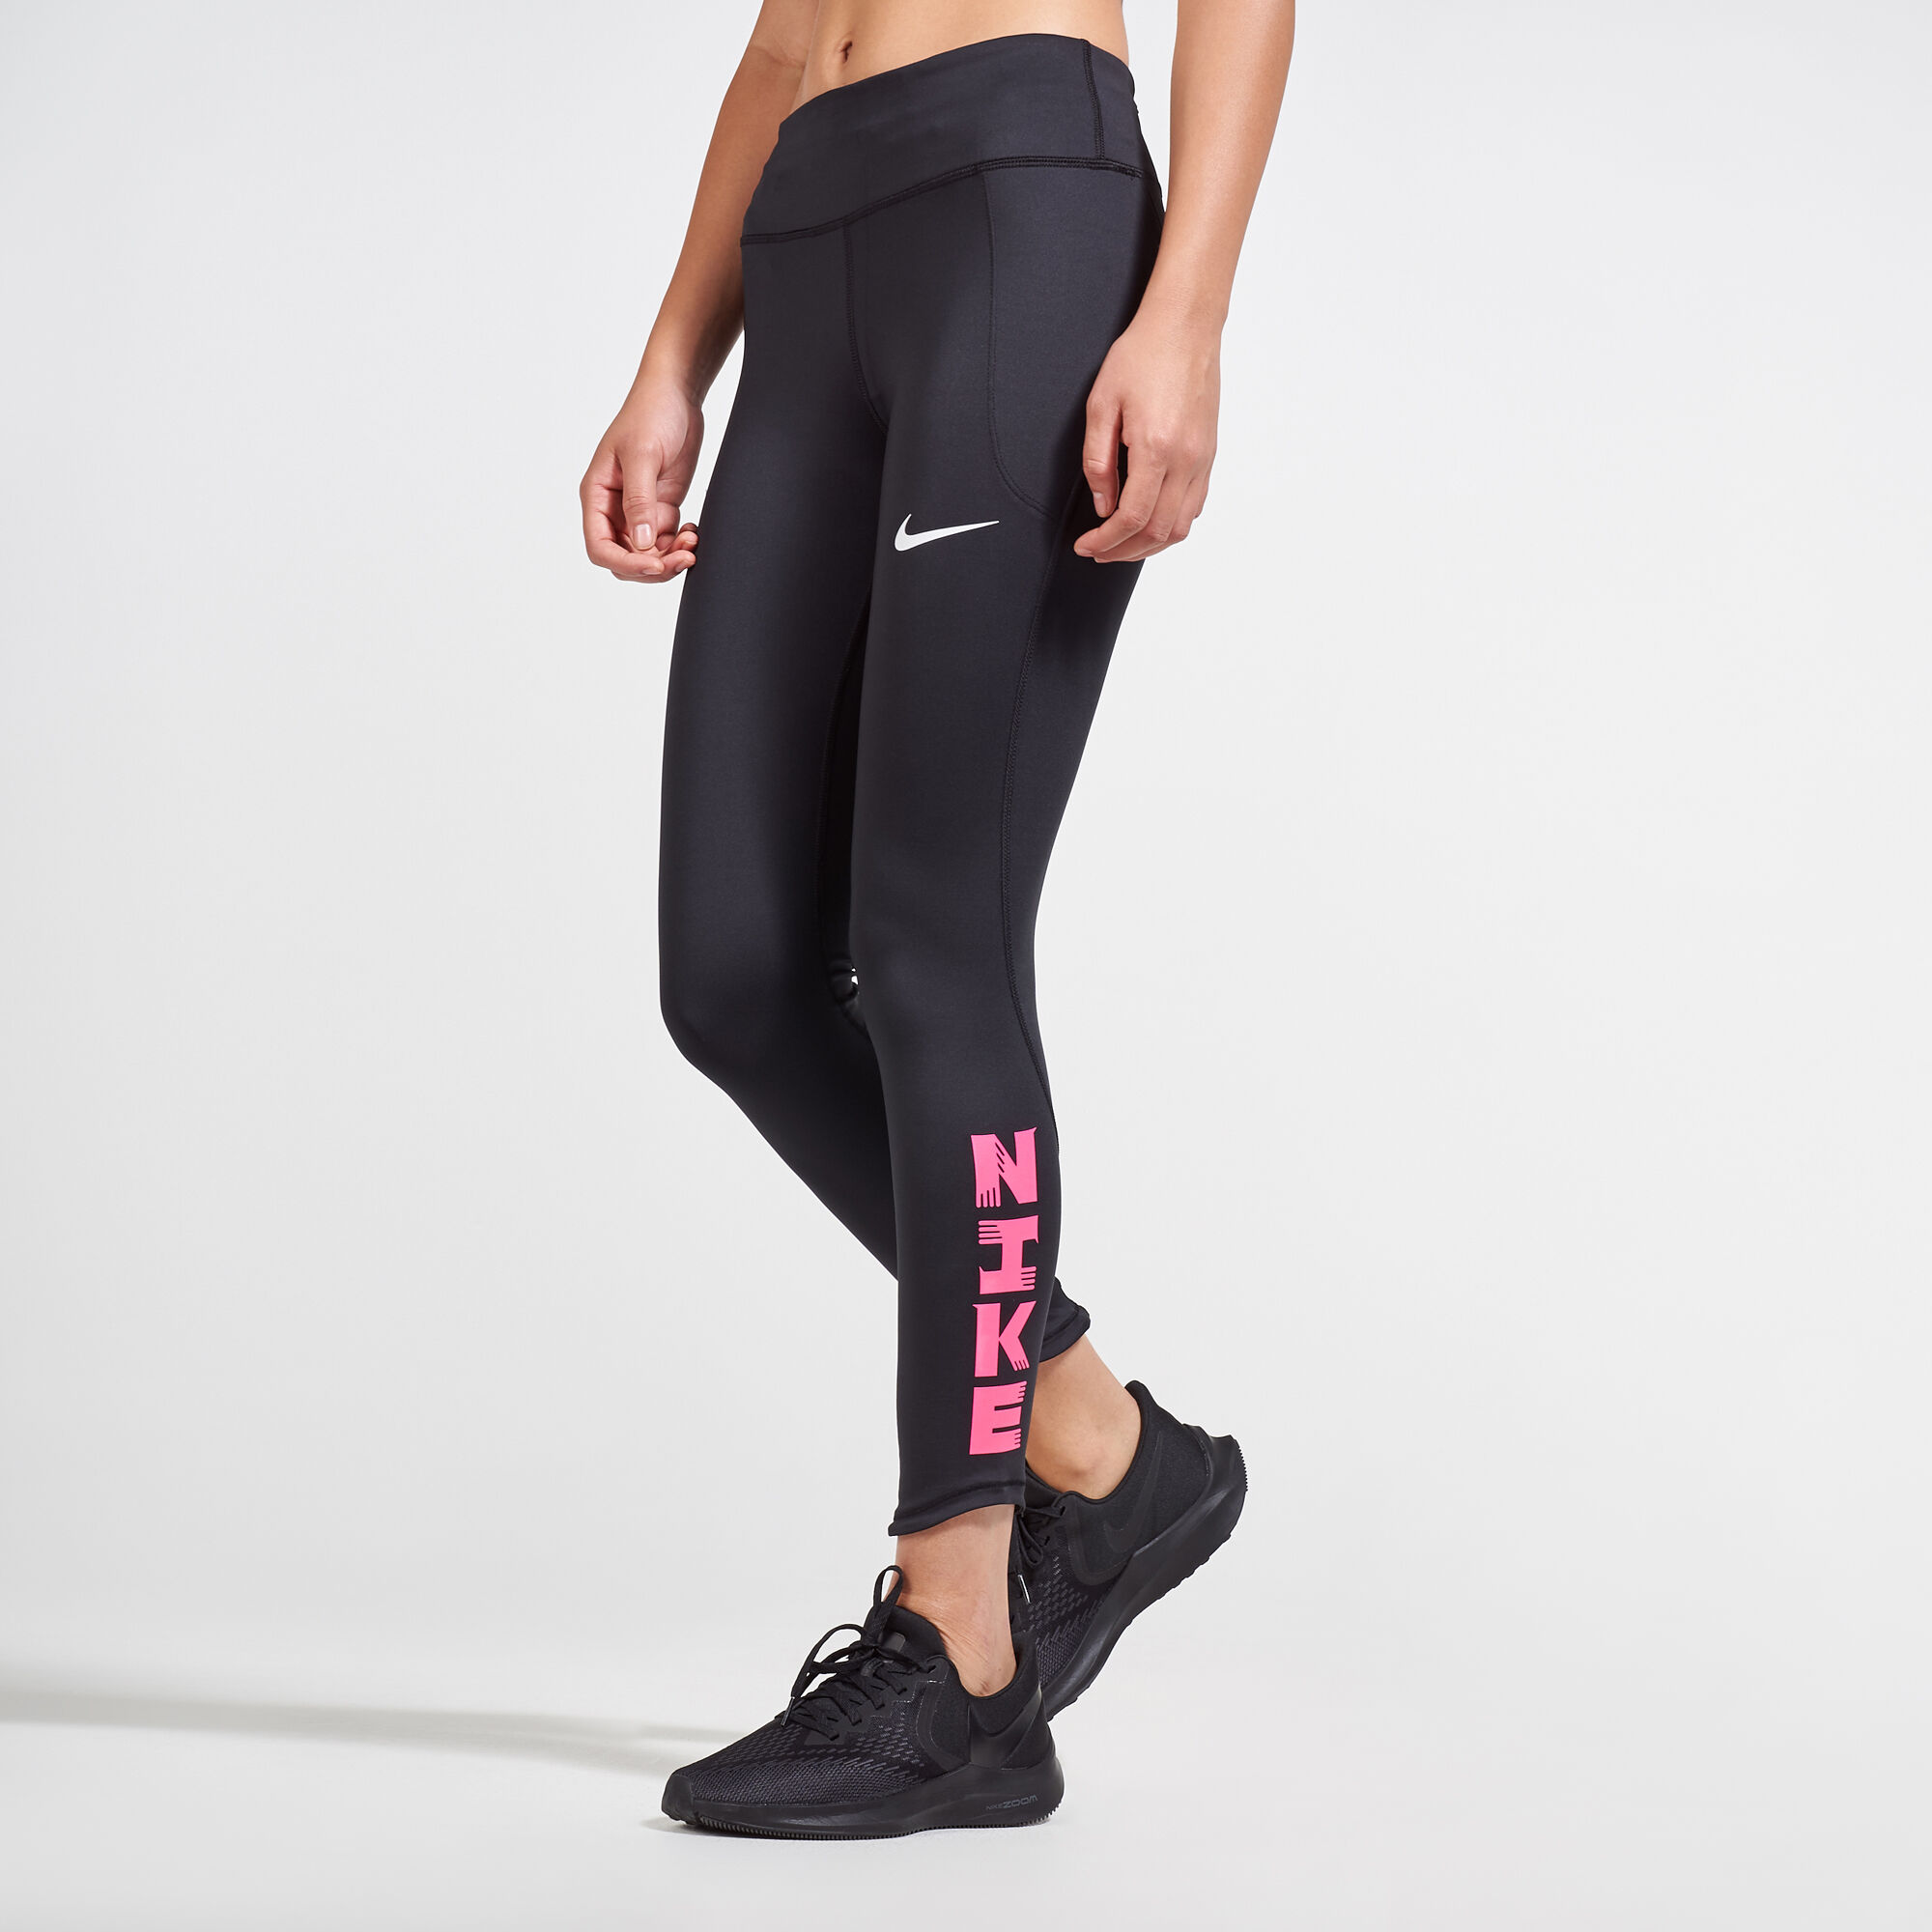 Women's Nike Icon Clash Fast Training Outfit Bra Leggings Set Plus